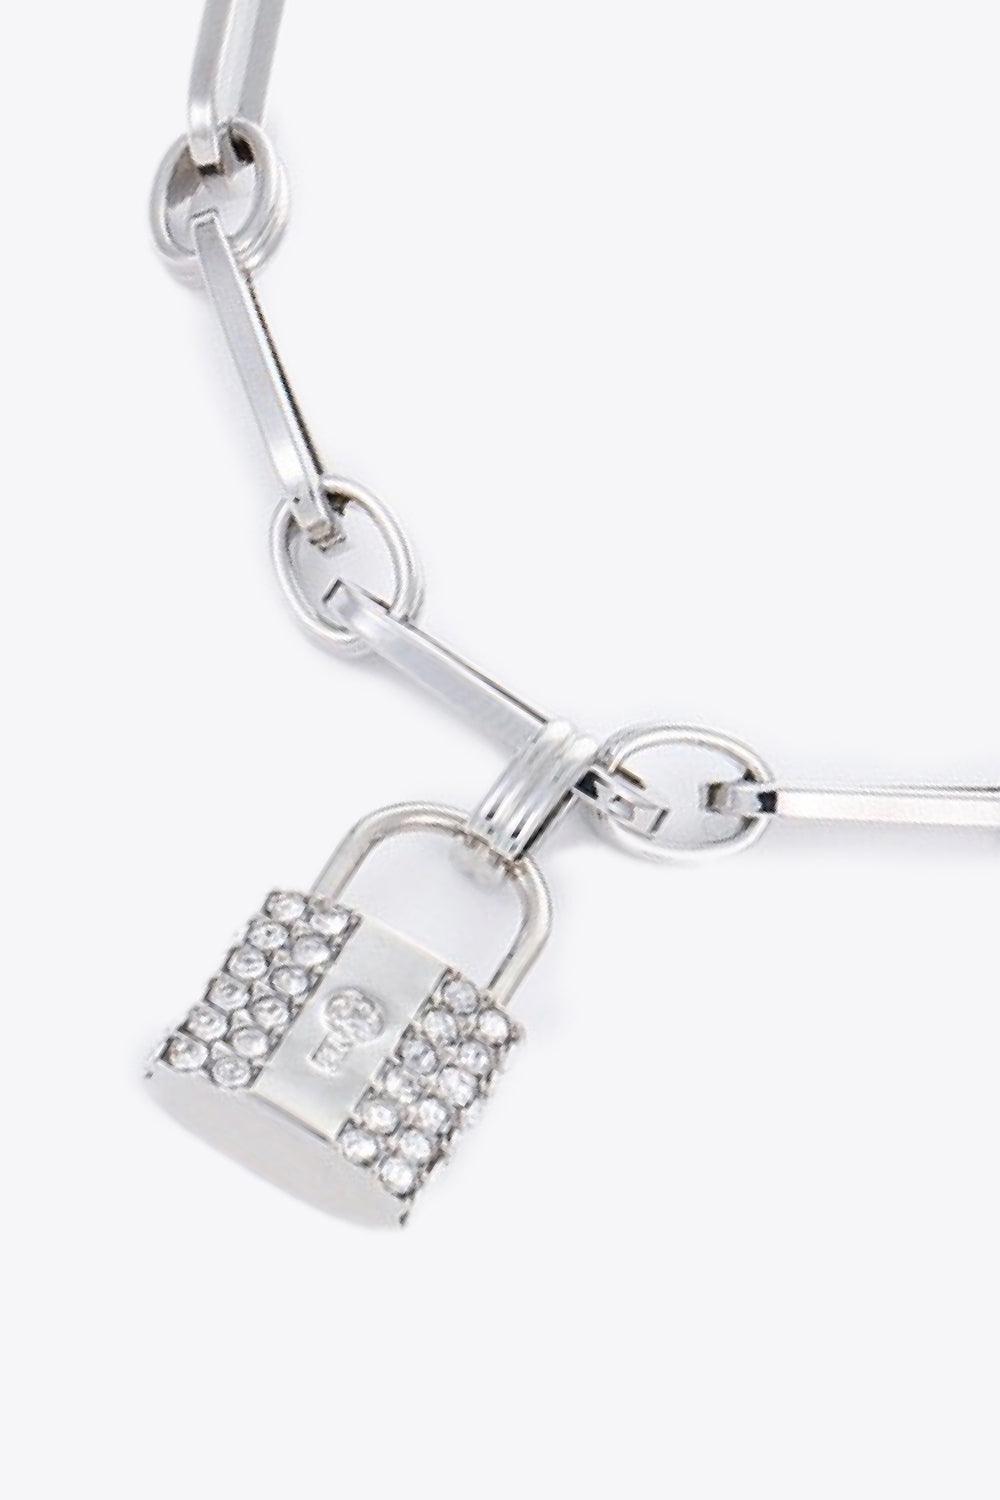 Lock Charm Chain Bracelet - Bona Fide Fashion